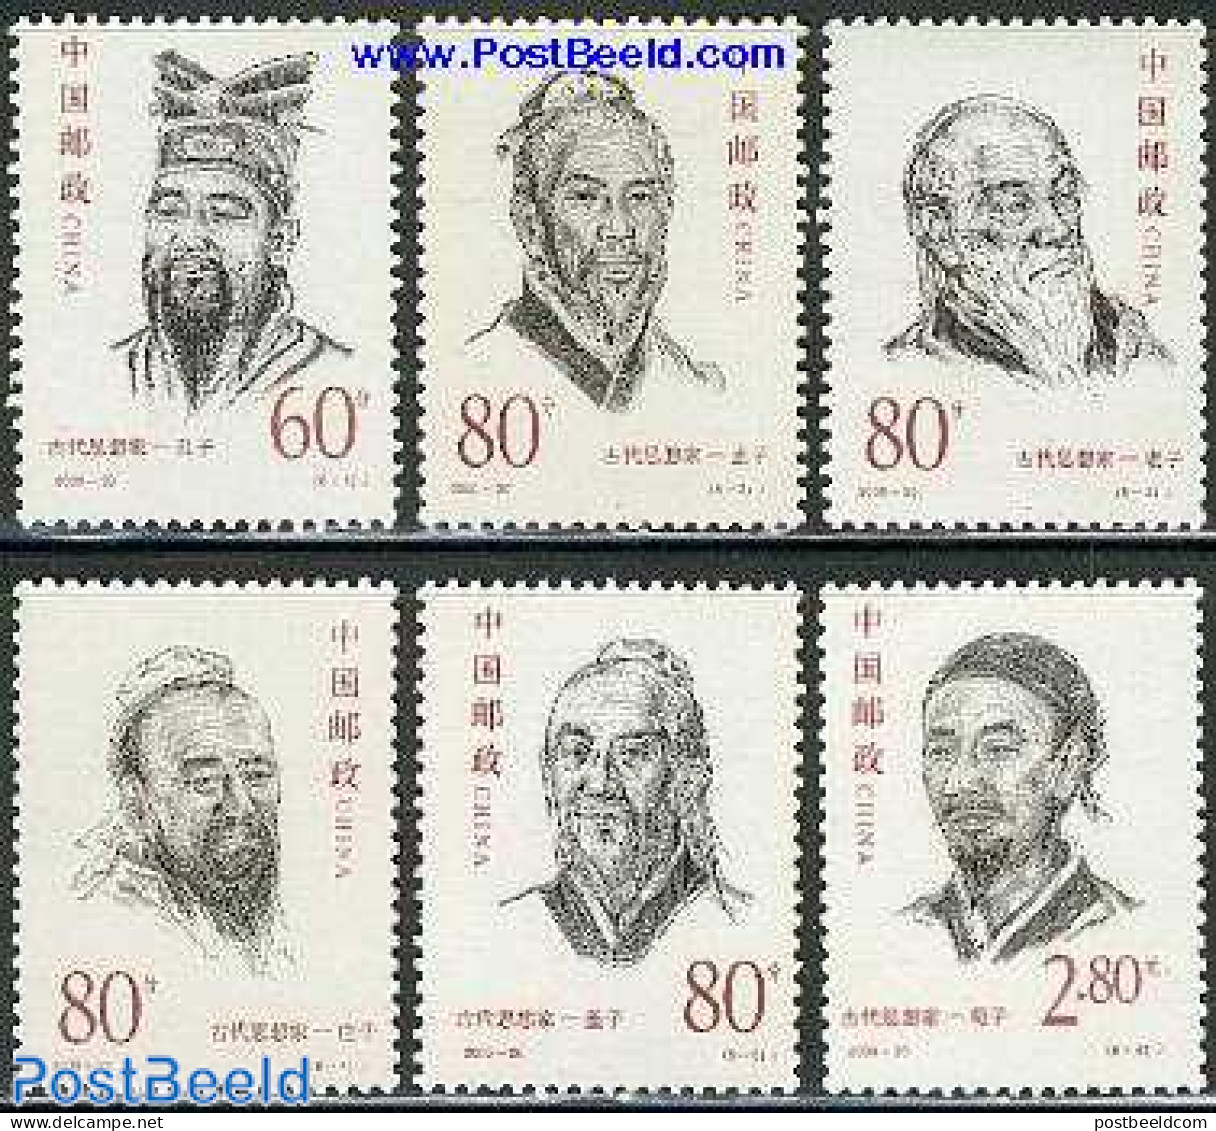 China People’s Republic 2000 Acient Philosophs 6v, Mint NH - Nuevos